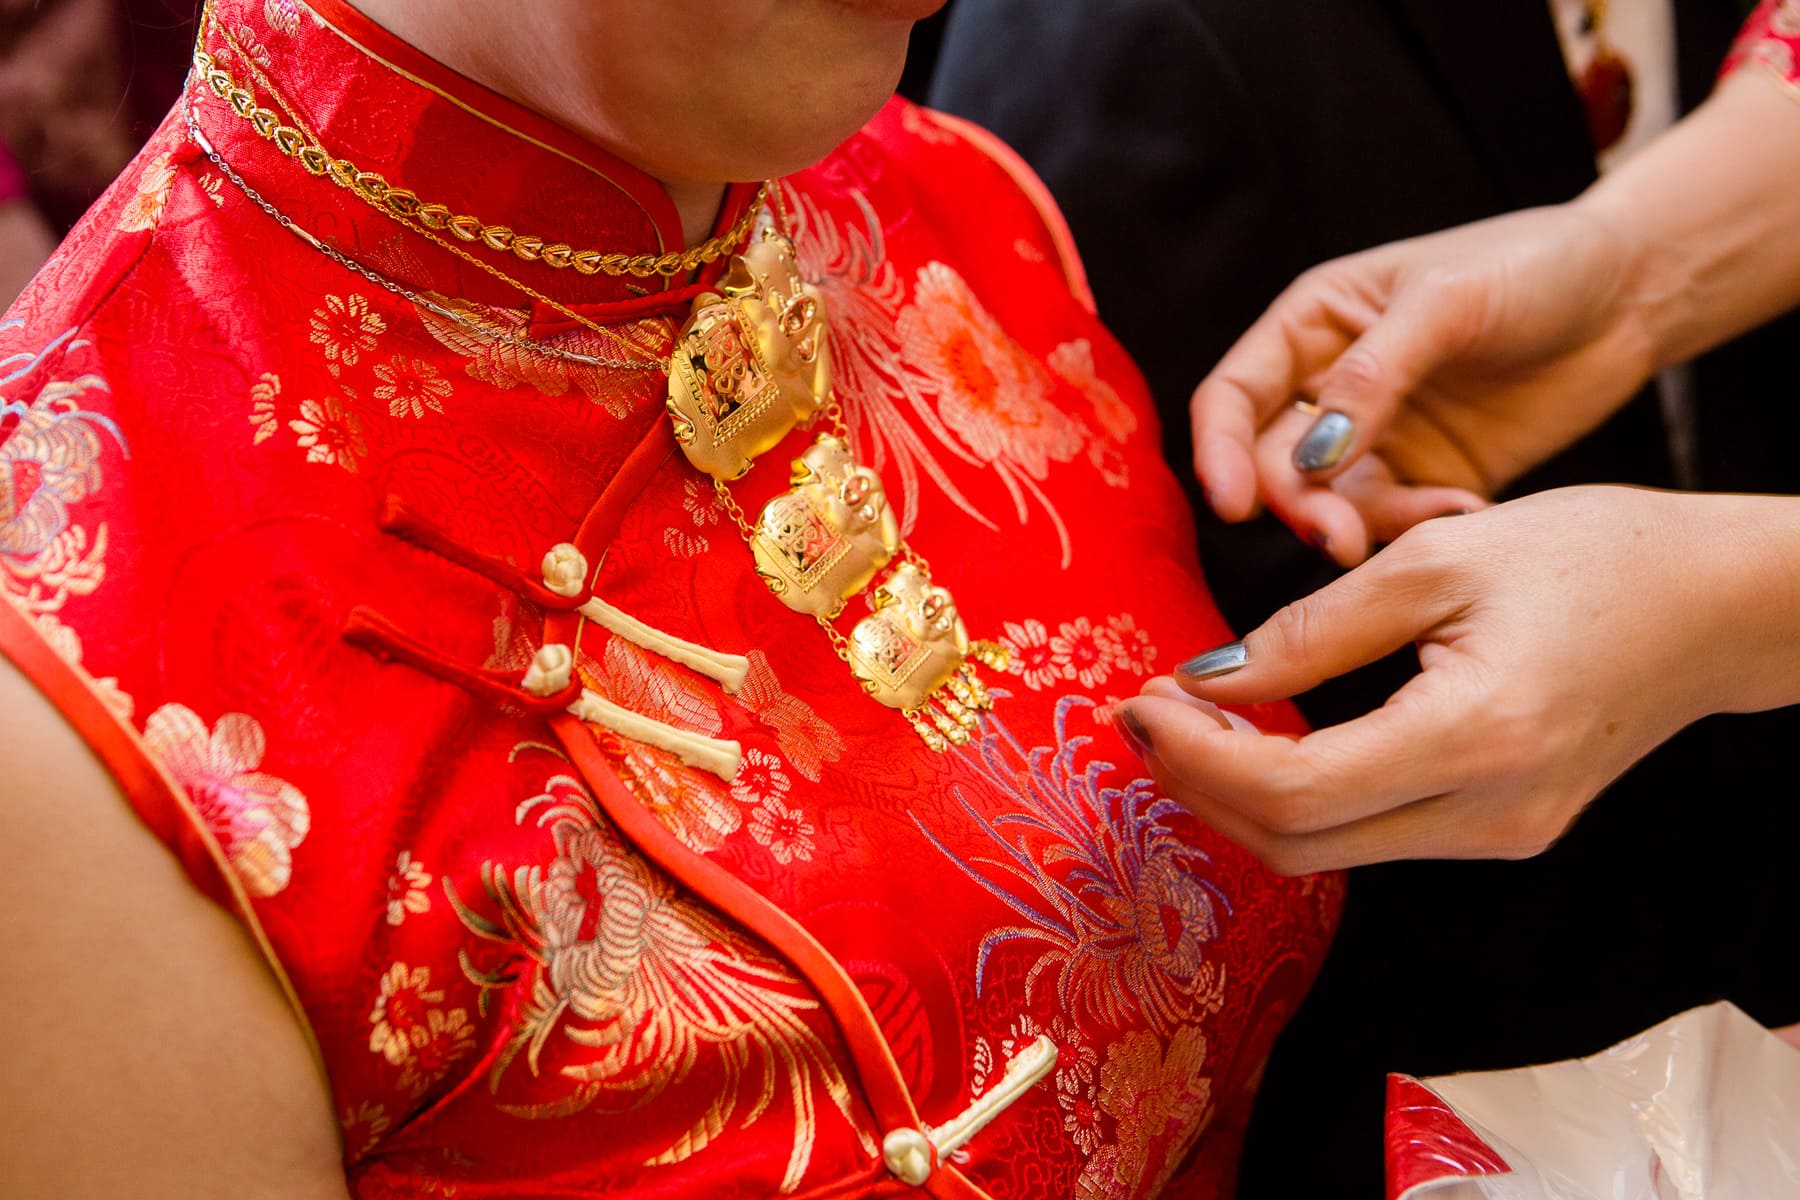 Bride in red dress receiving golden pig necklace during tea ceremony